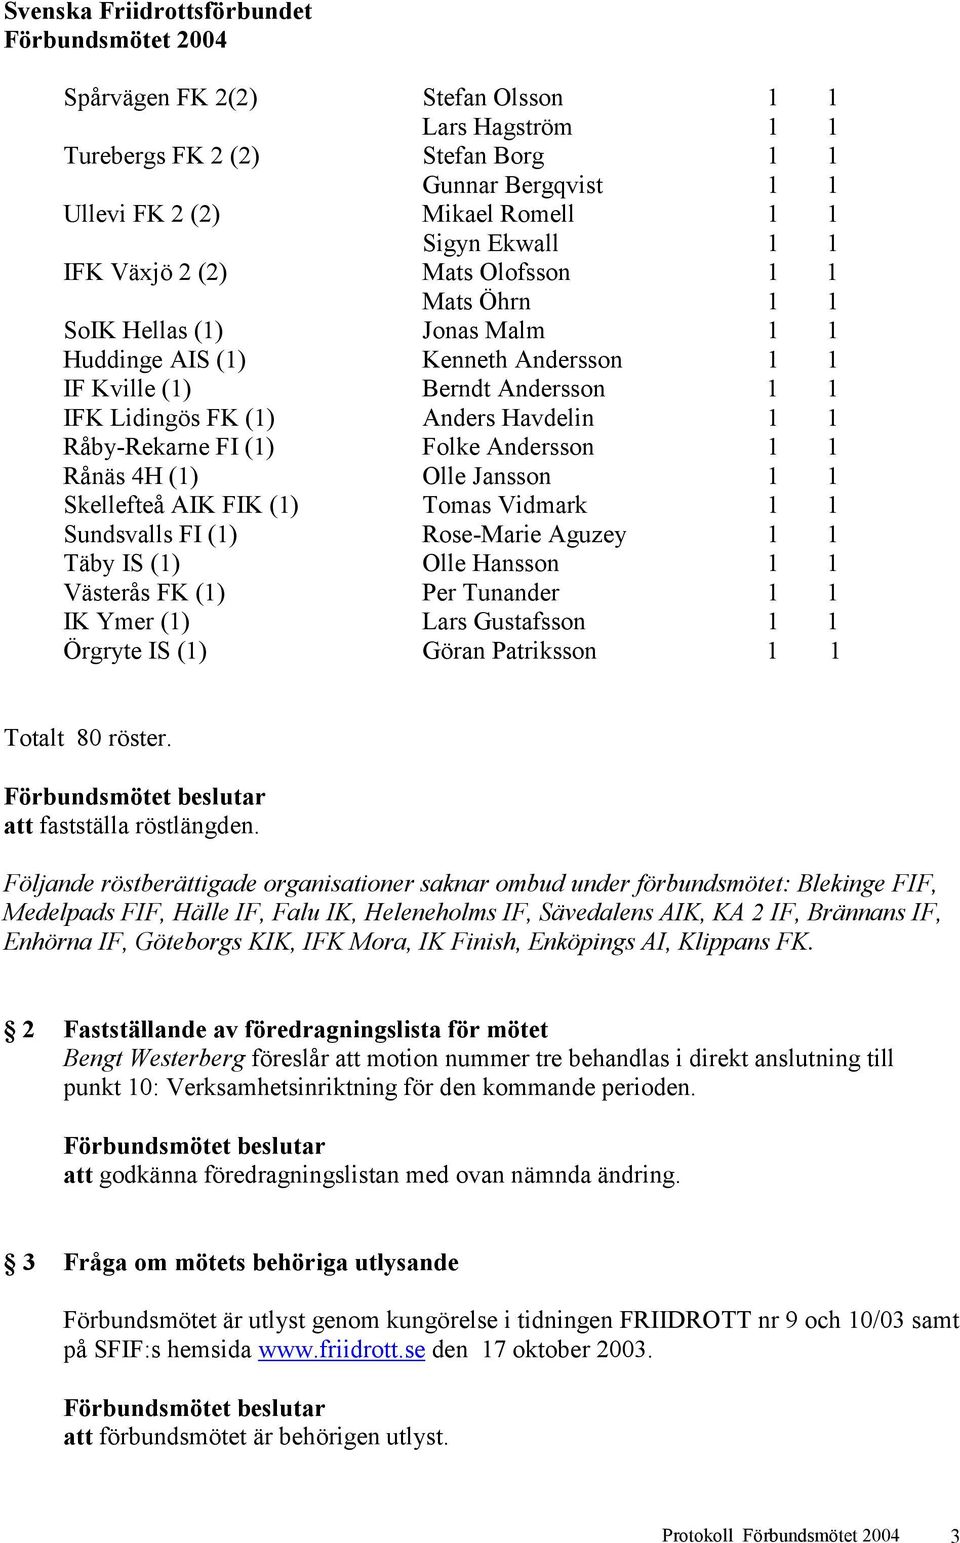 4H (1) Olle Jansson 1 1 Skellefteå AIK FIK (1) Tomas Vidmark 1 1 Sundsvalls FI (1) Rose-Marie Aguzey 1 1 Täby IS (1) Olle Hansson 1 1 Västerås FK (1) Per Tunander 1 1 IK Ymer (1) Lars Gustafsson 1 1